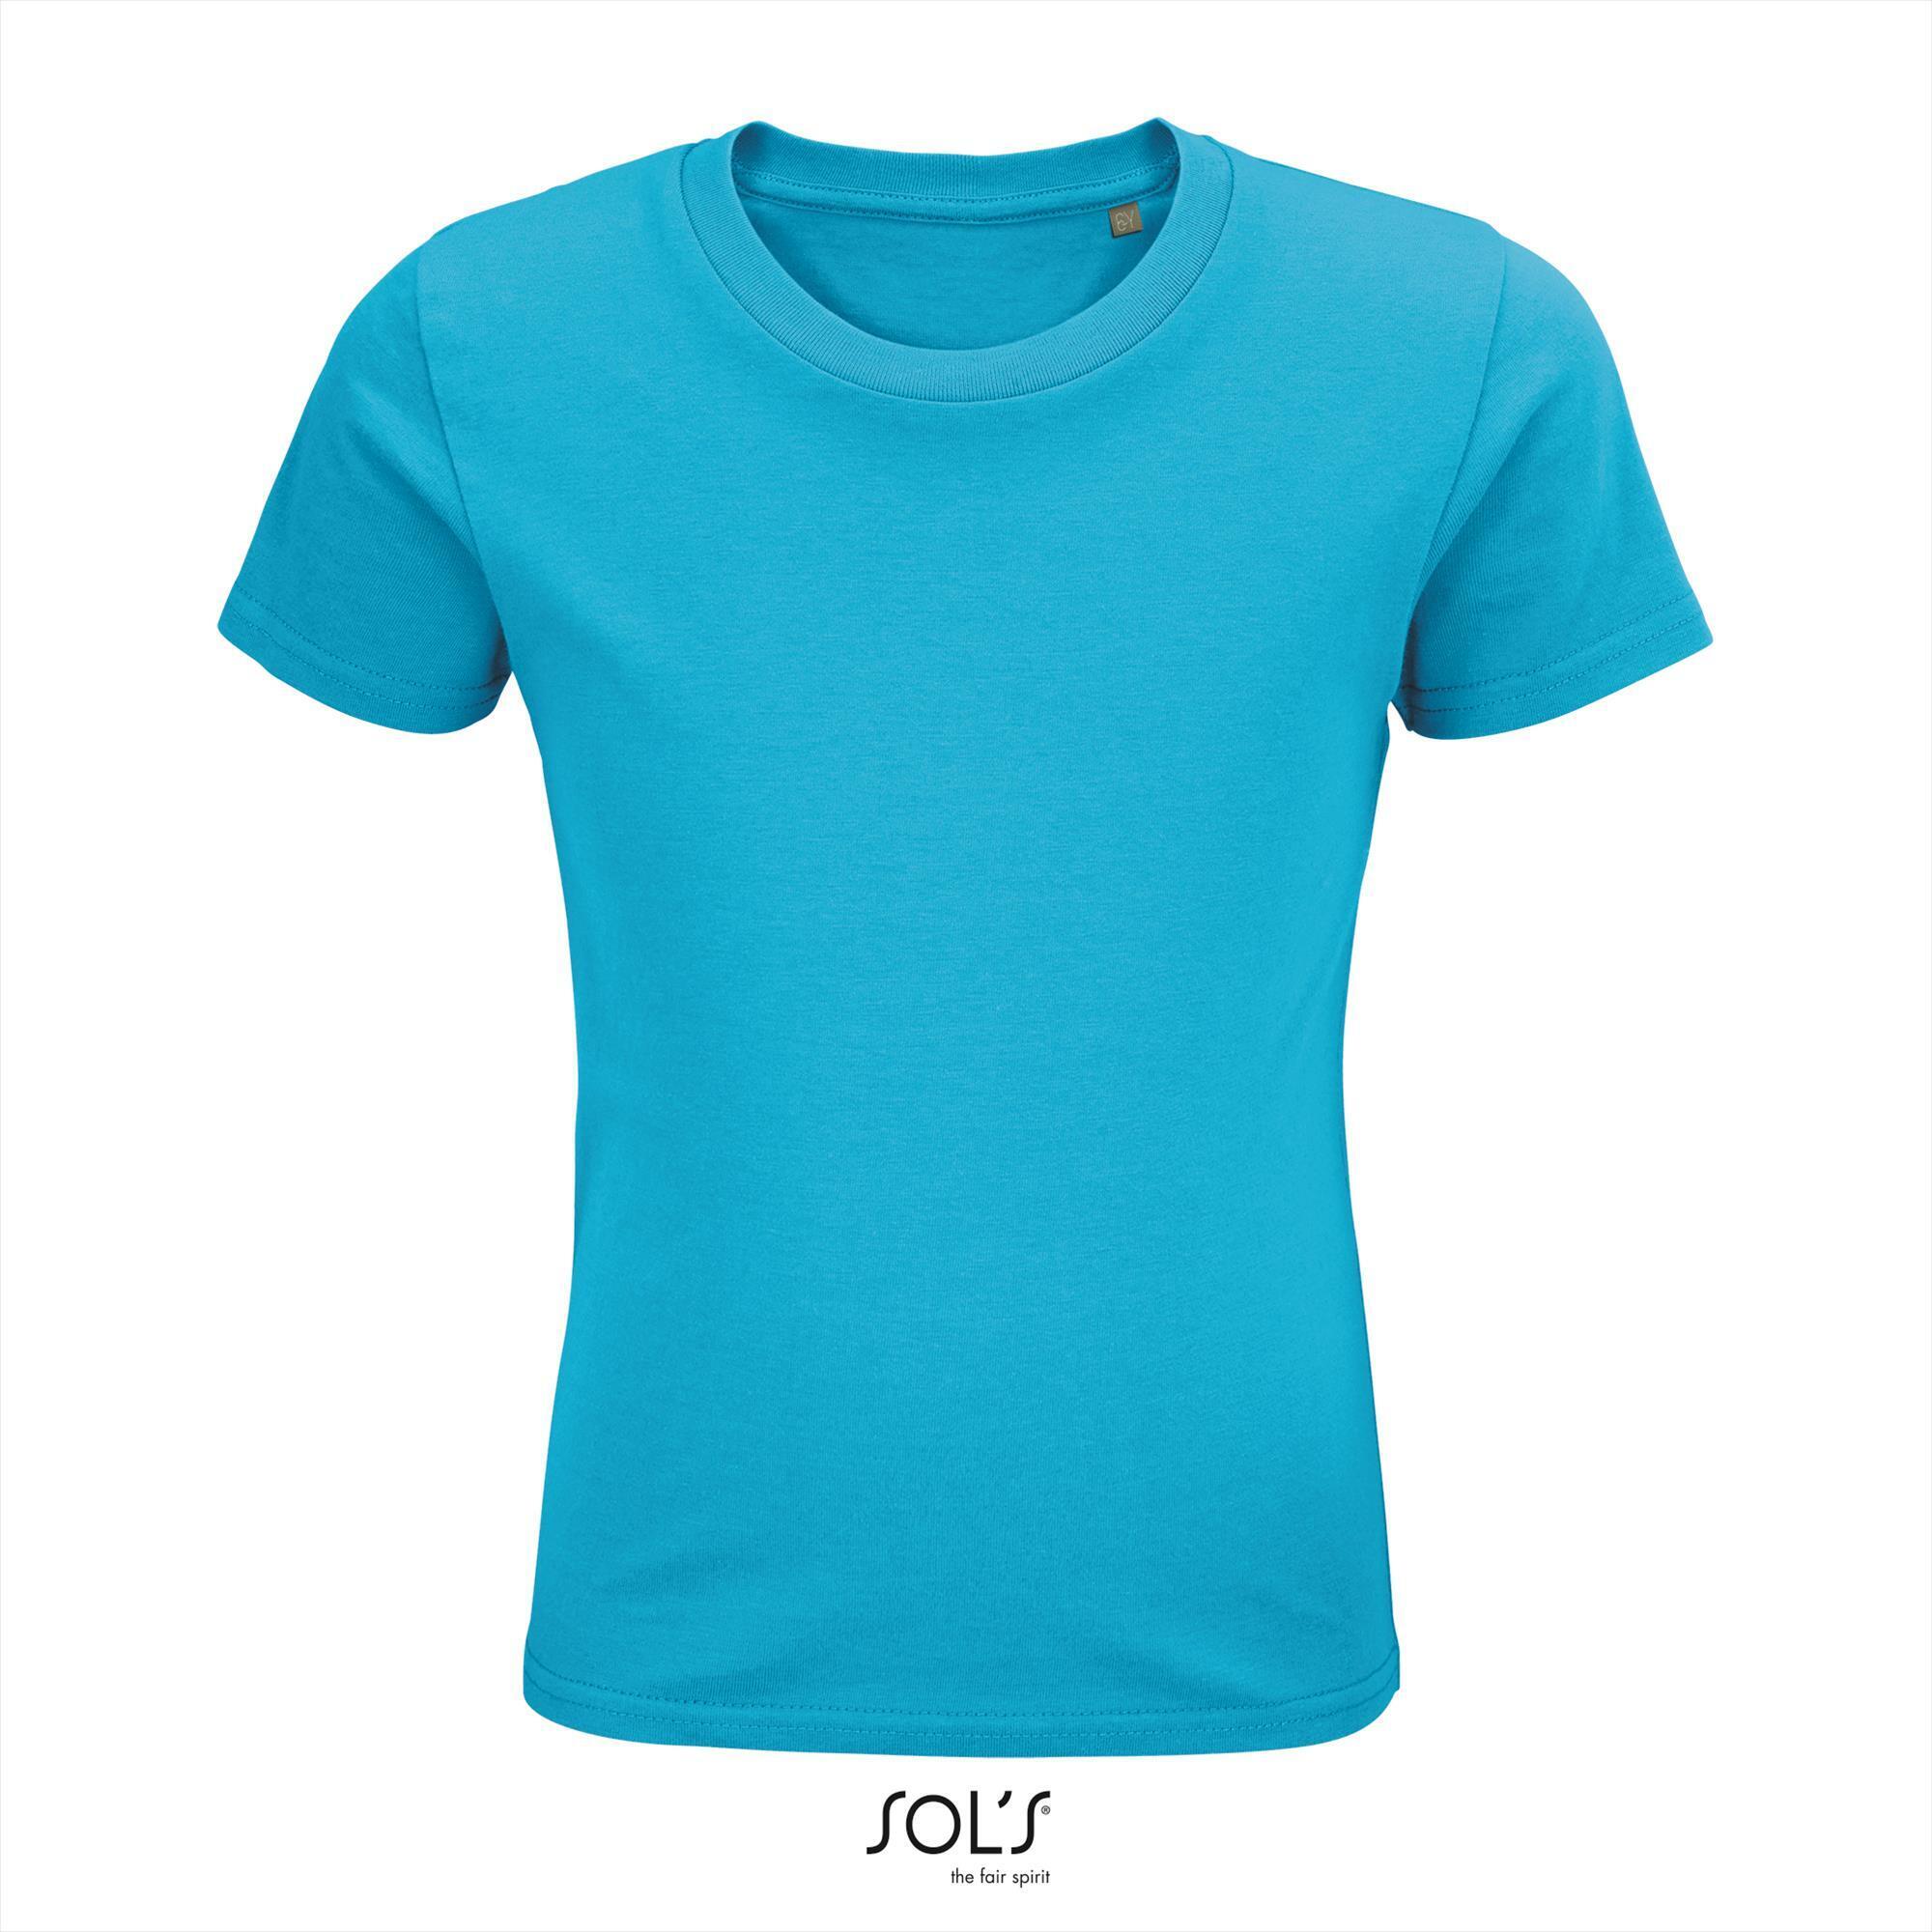 Kinder t-shirt aqua blauw biologisch katoen ronde hals